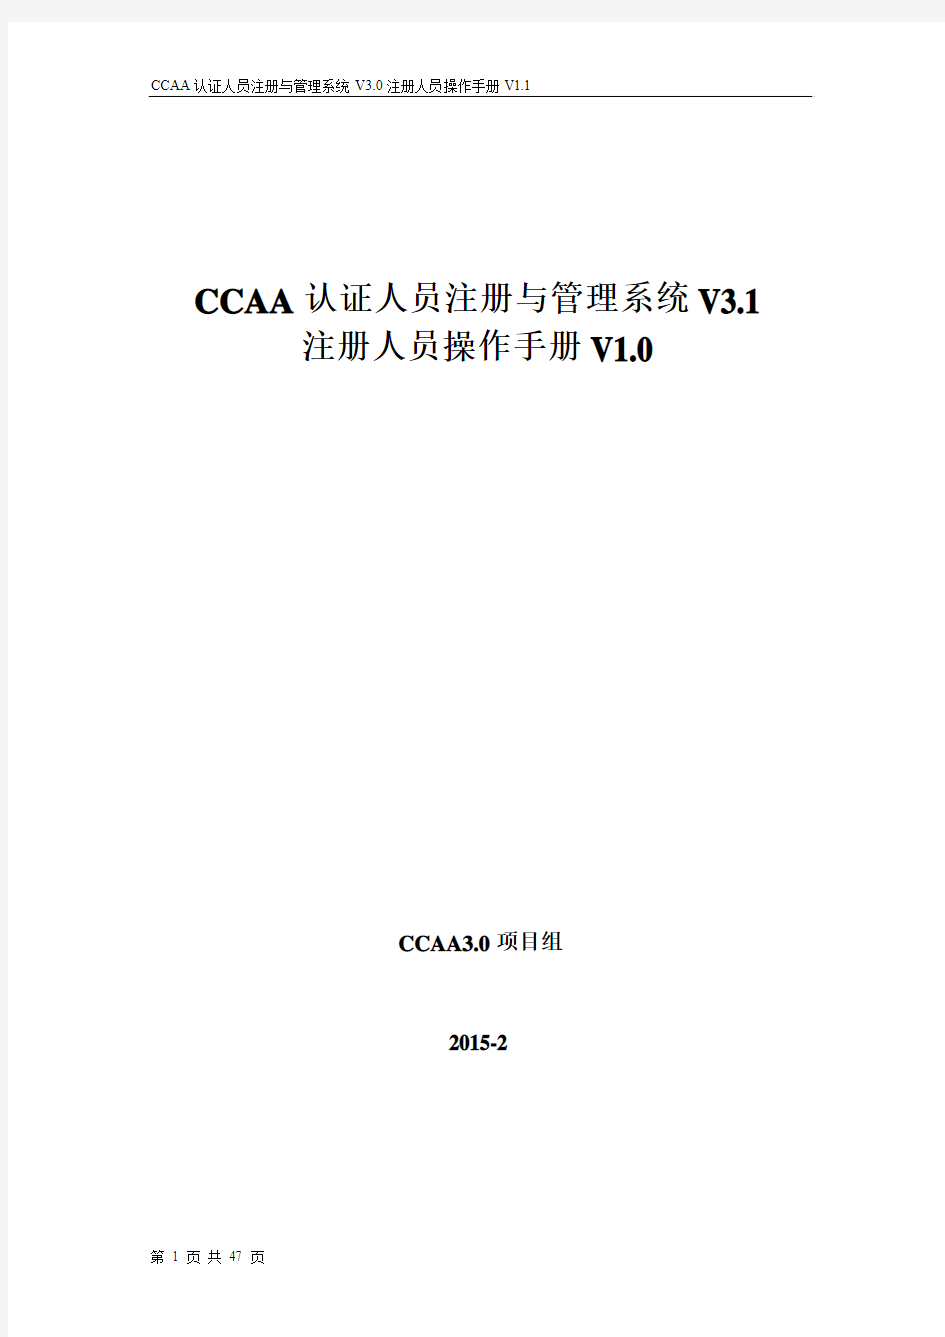 CCAA认证人员注册与管理系统V3.1注册人员操作手册V1.0